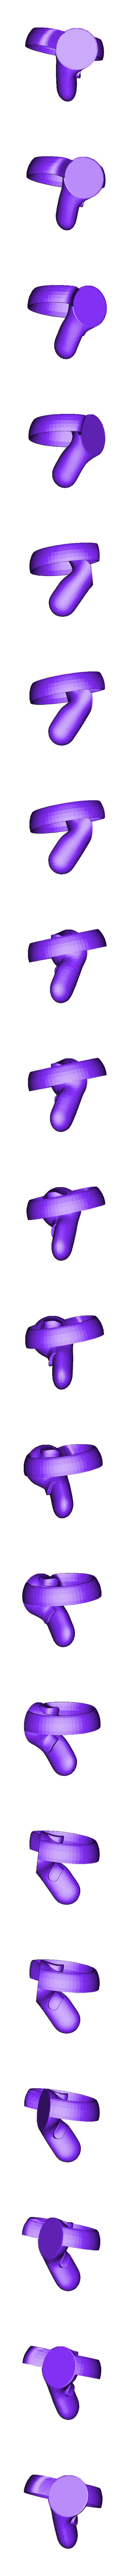 Body_Whole.stl Download free STL file Oculus Rift Controller • 3D printing template, indigo4